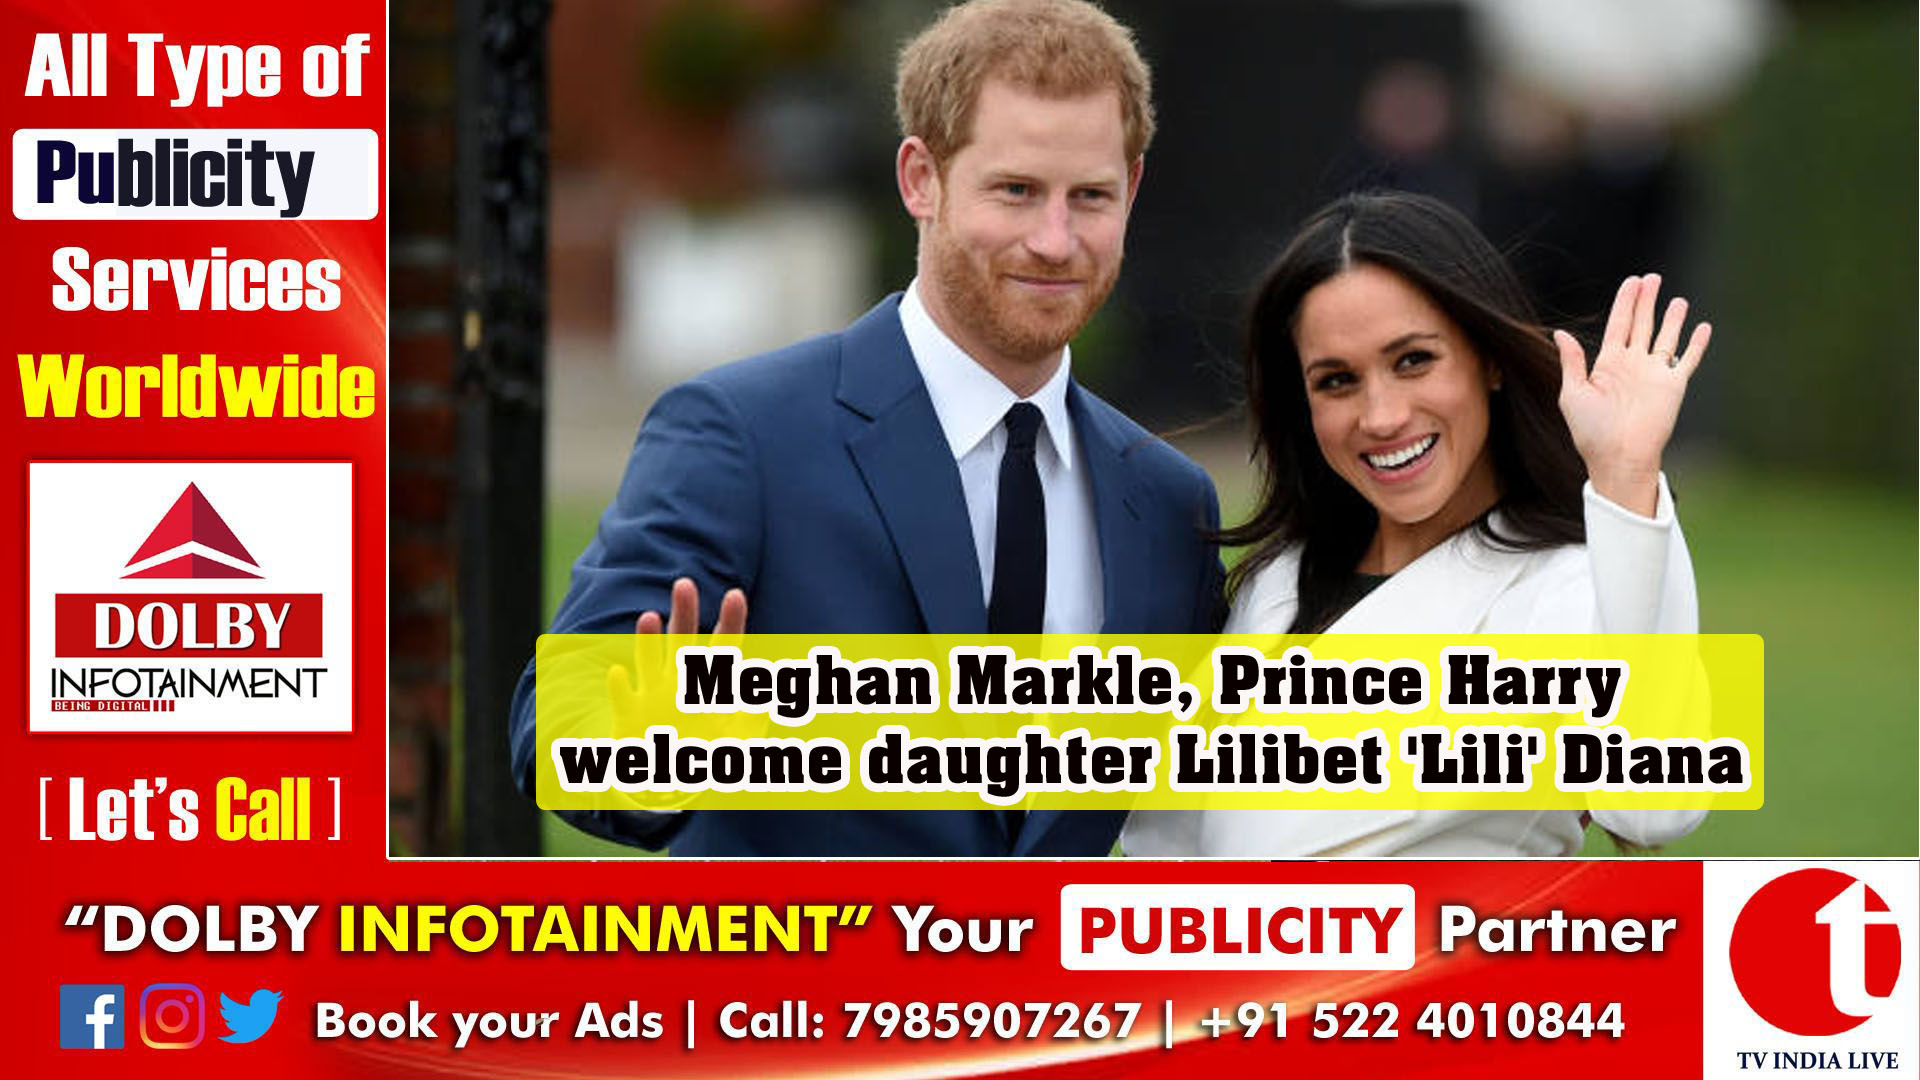 Meghan Markle, Prince Harry welcome daughter Lilibet 'Lili' Diana